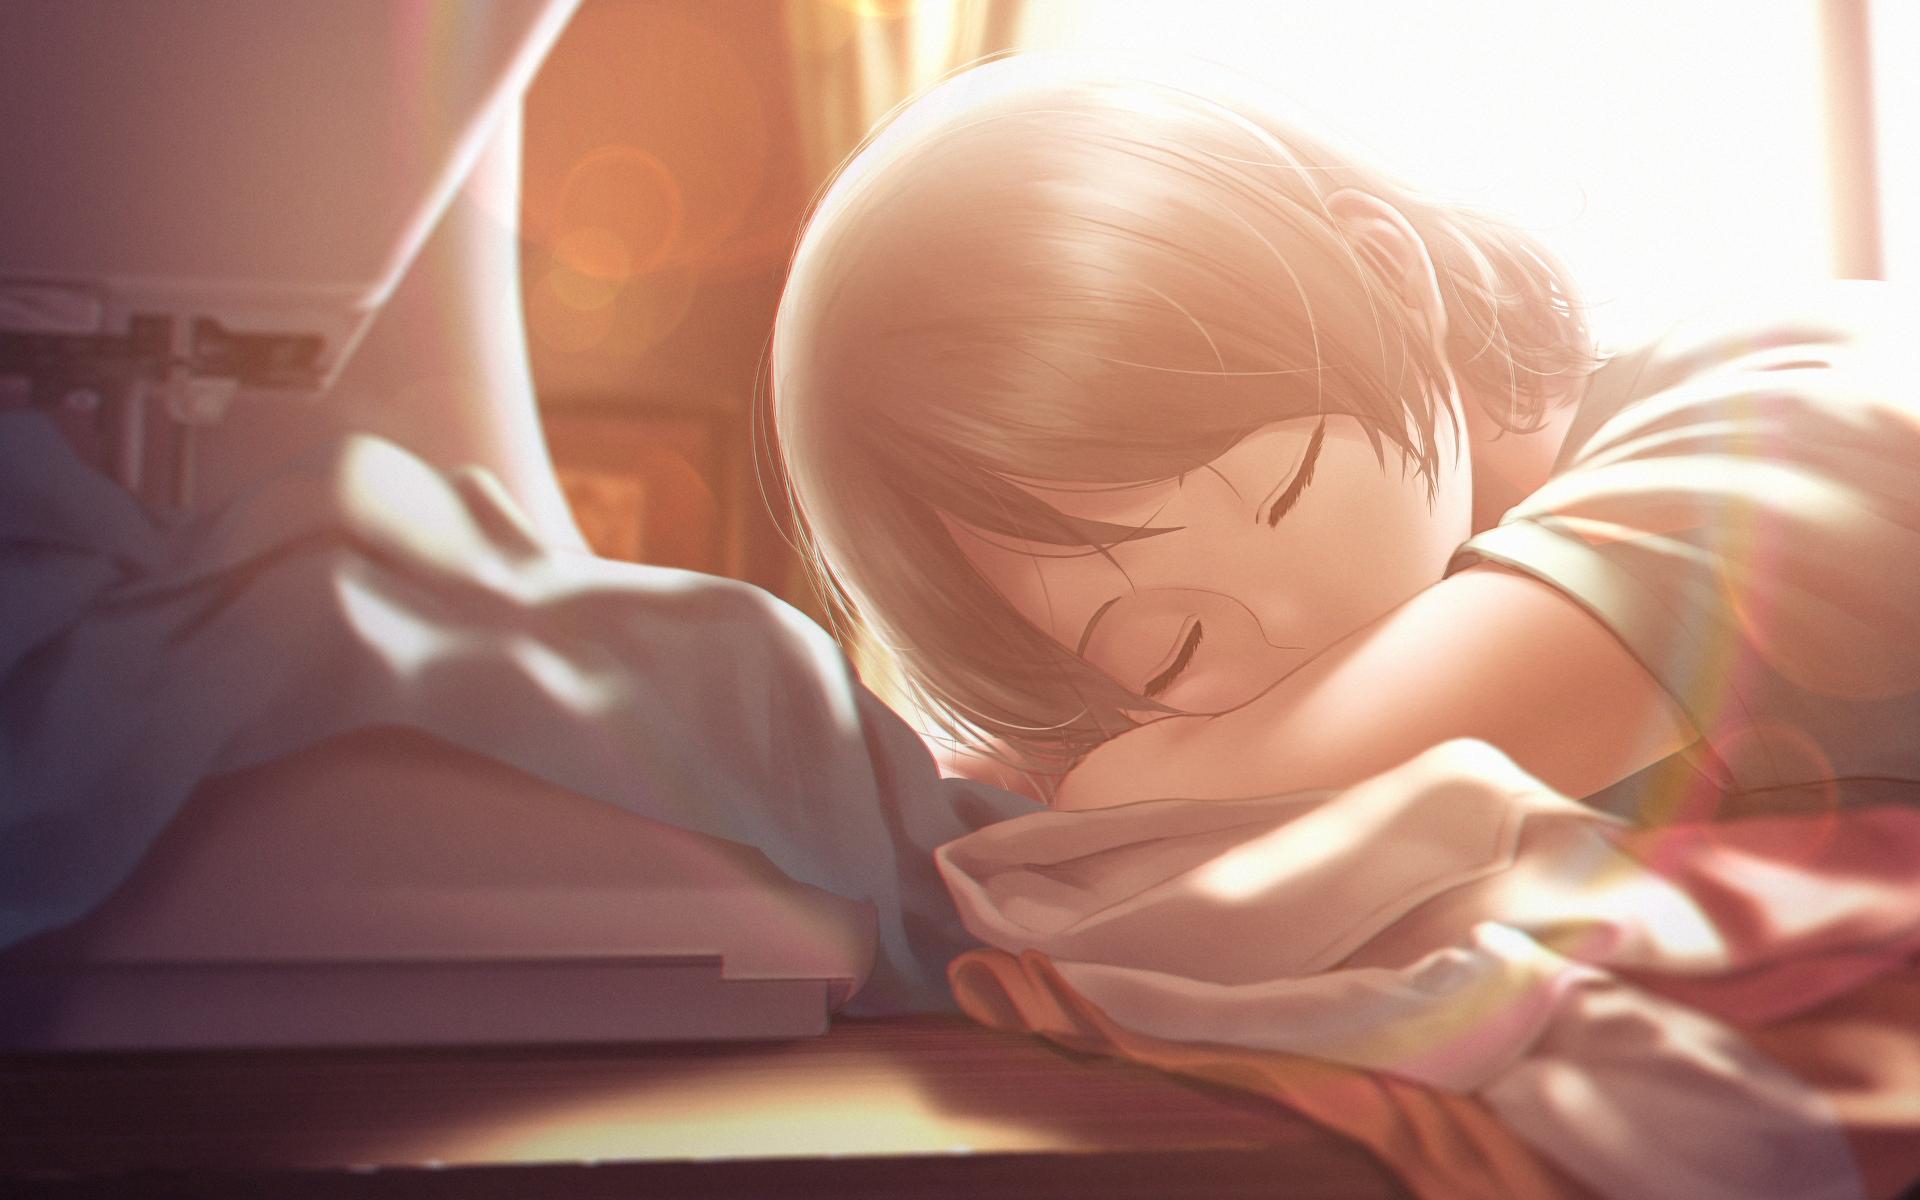 Sleepy anime girl by NeuroMage on DeviantArt